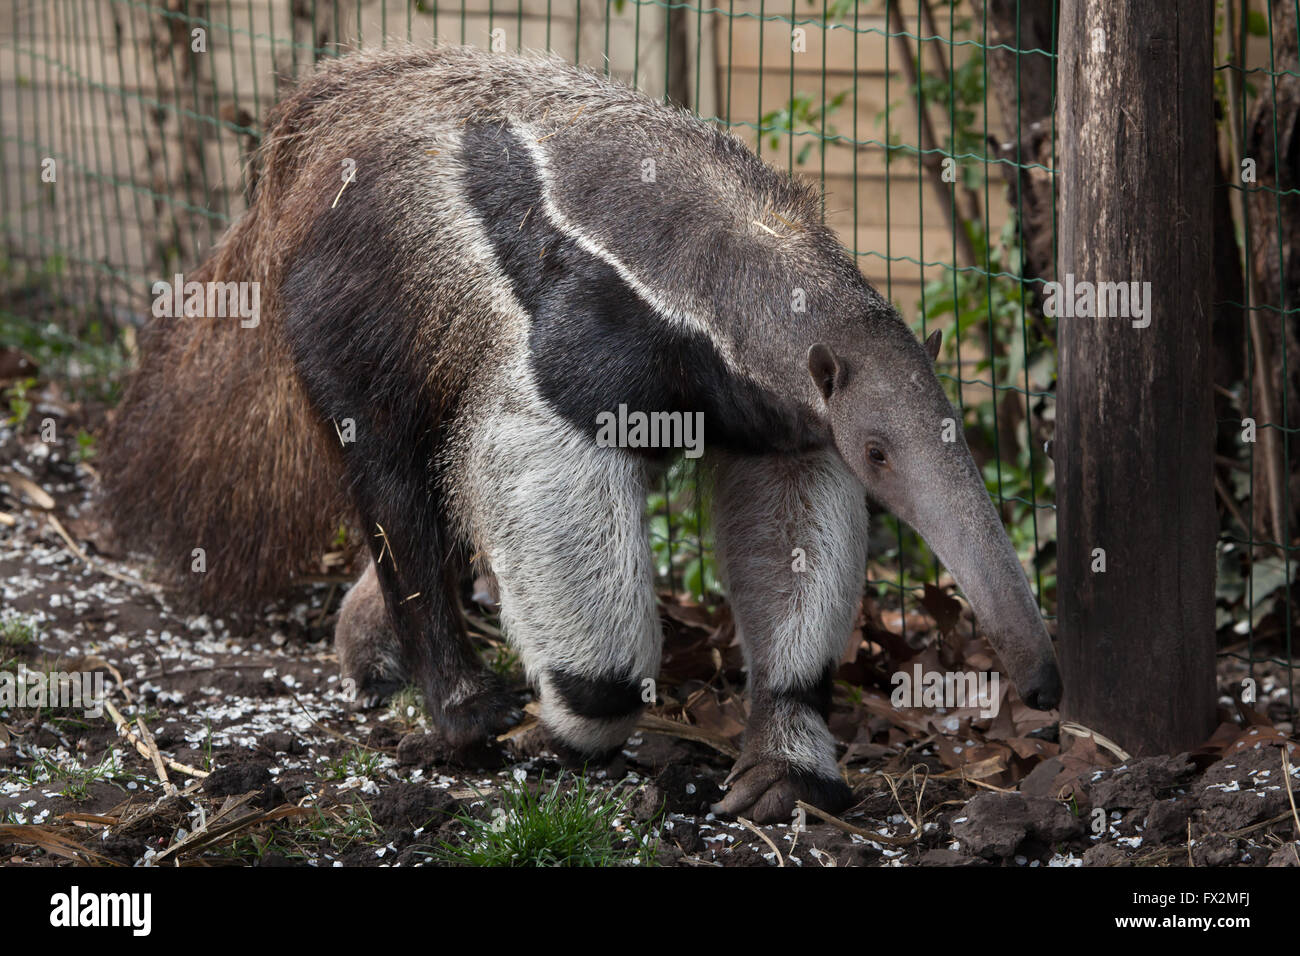 Giant anteater (Myrmecophaga tridactyla), noto anche come la formica portano a Budapest Zoo in Budapest, Ungheria. Foto Stock